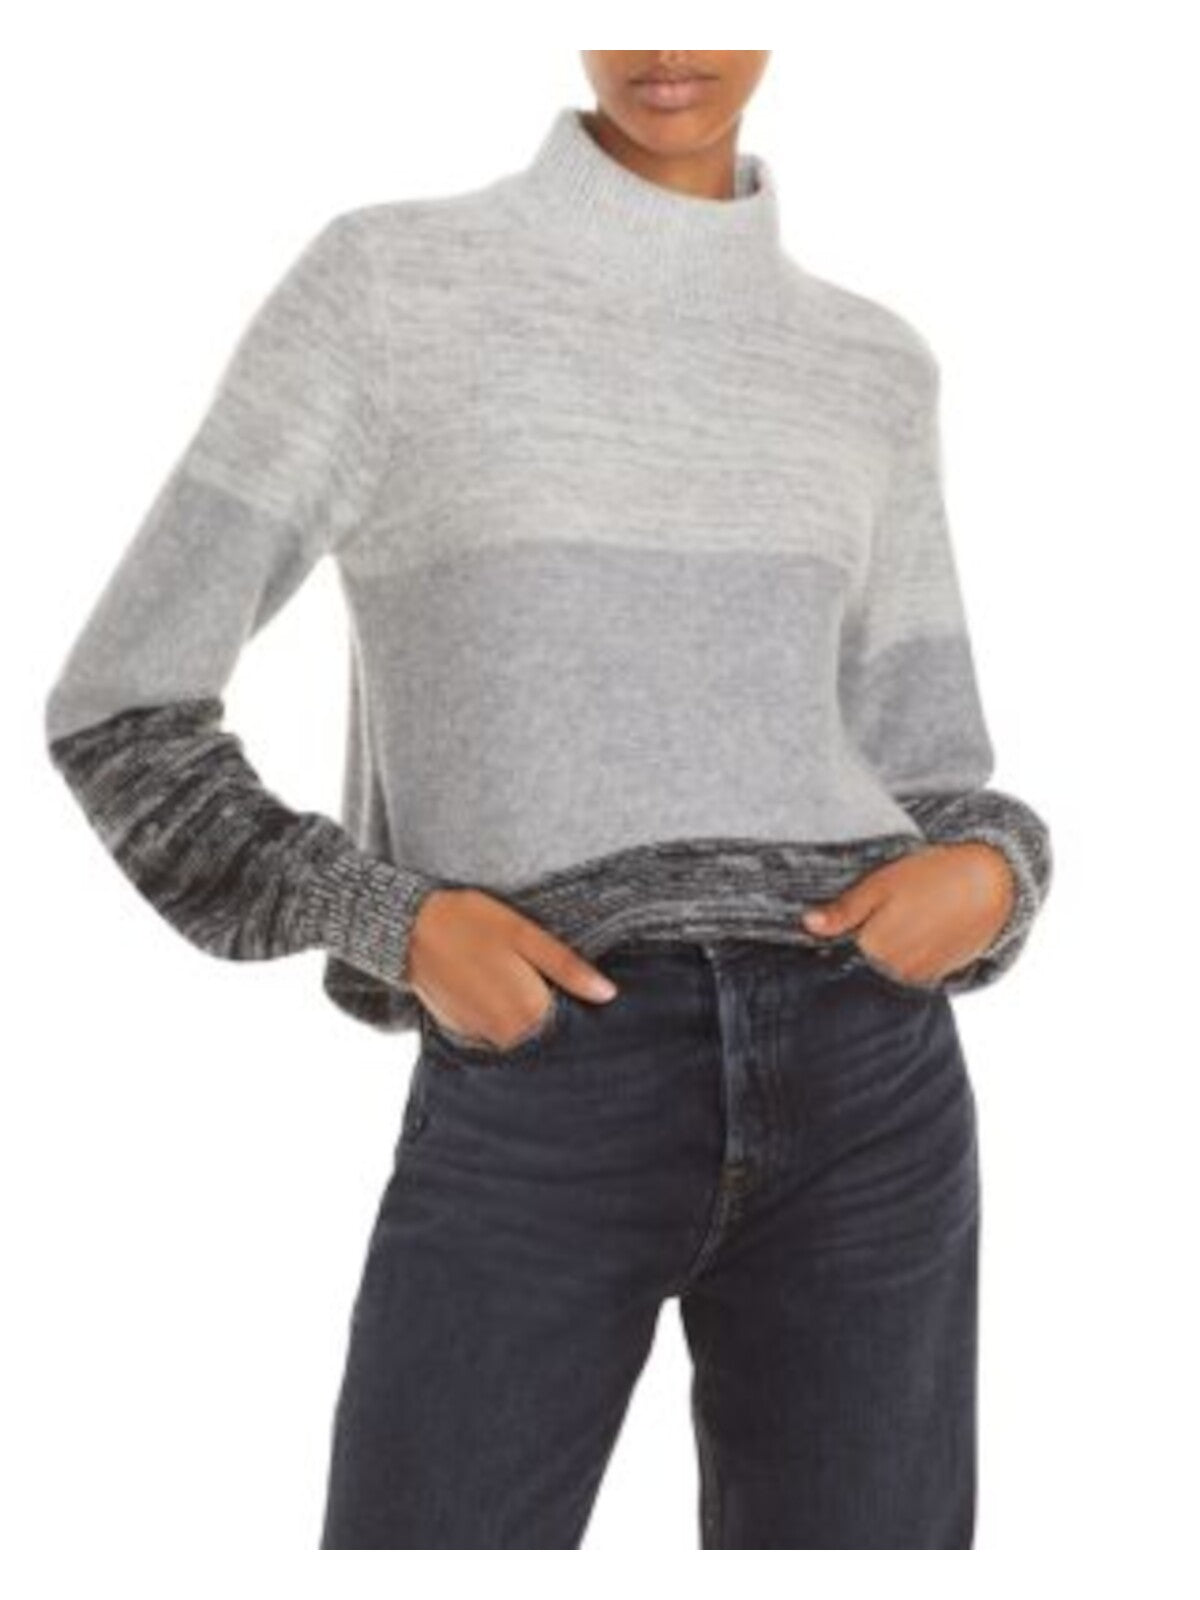 Designer Brand Womens Gray Striped Long Sleeve Mock Neck Sweater XS